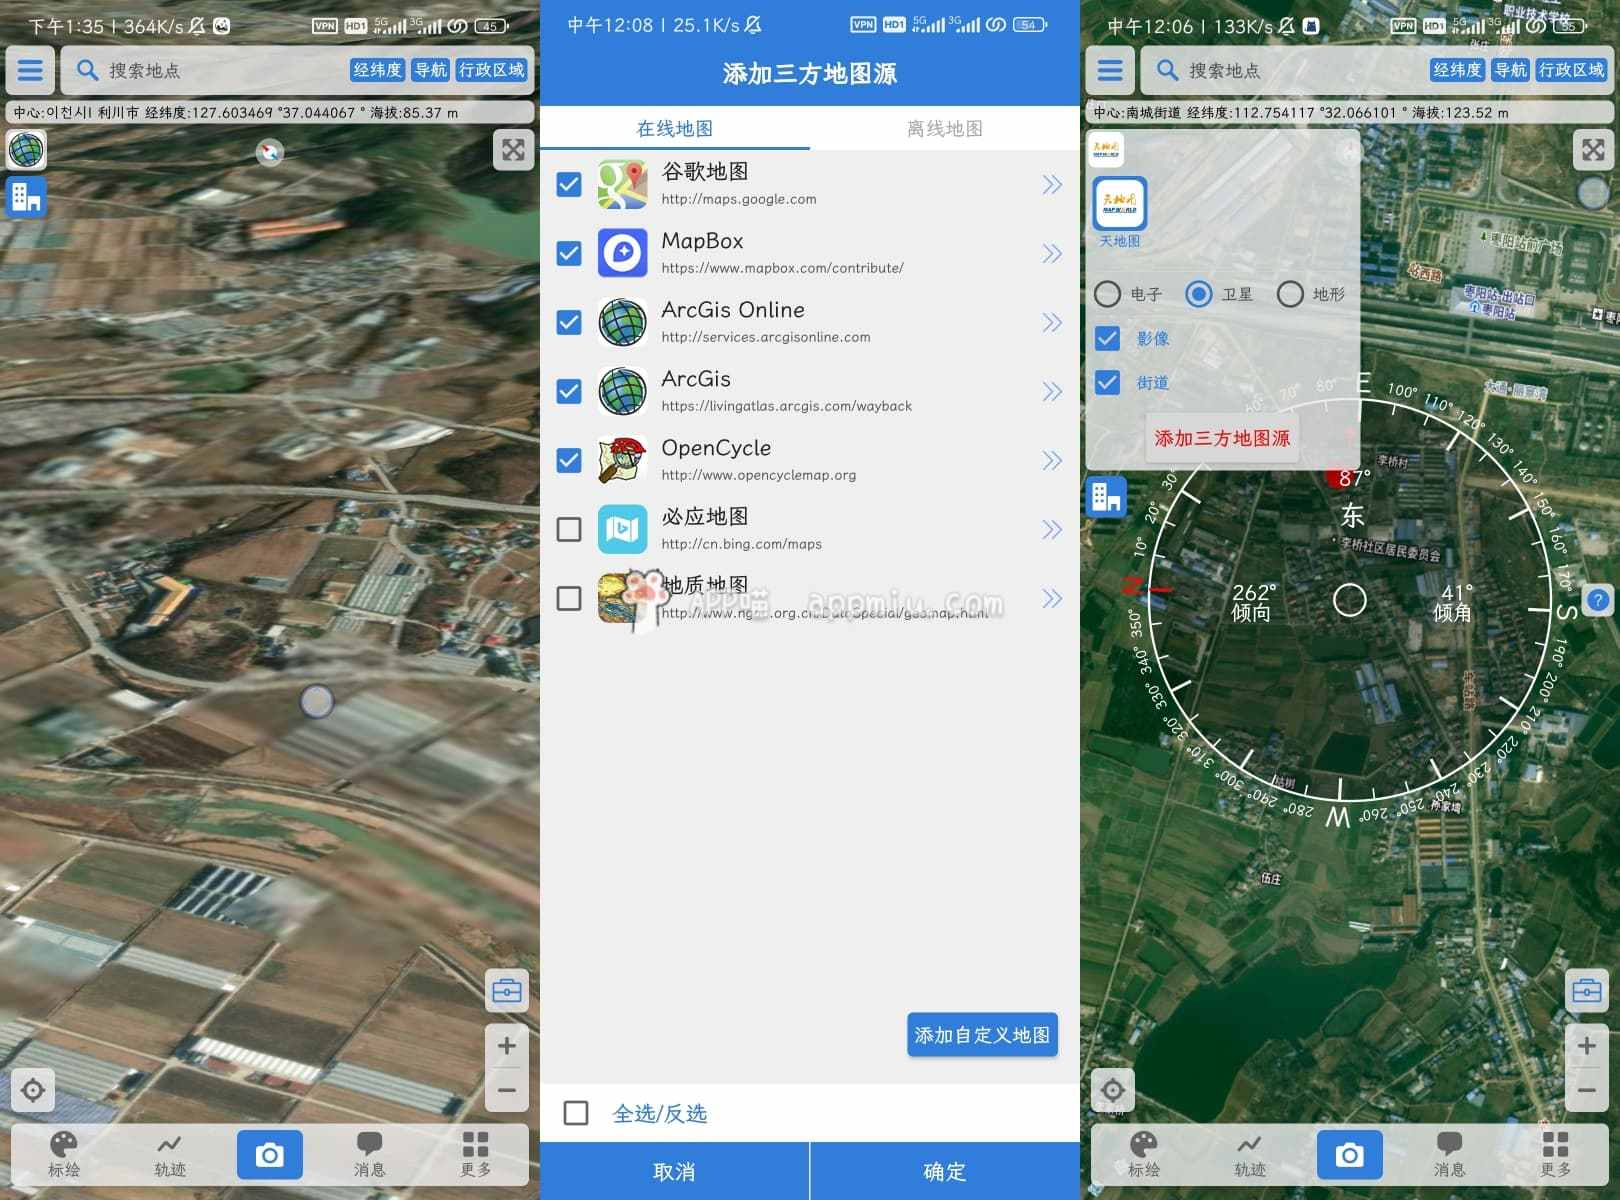 [Android] 3D地球-BIGEMAP v2.5.2 轨迹记录、测绘标记、三维立体建筑、3D地球、离线地图-APP喵-阿喵软件